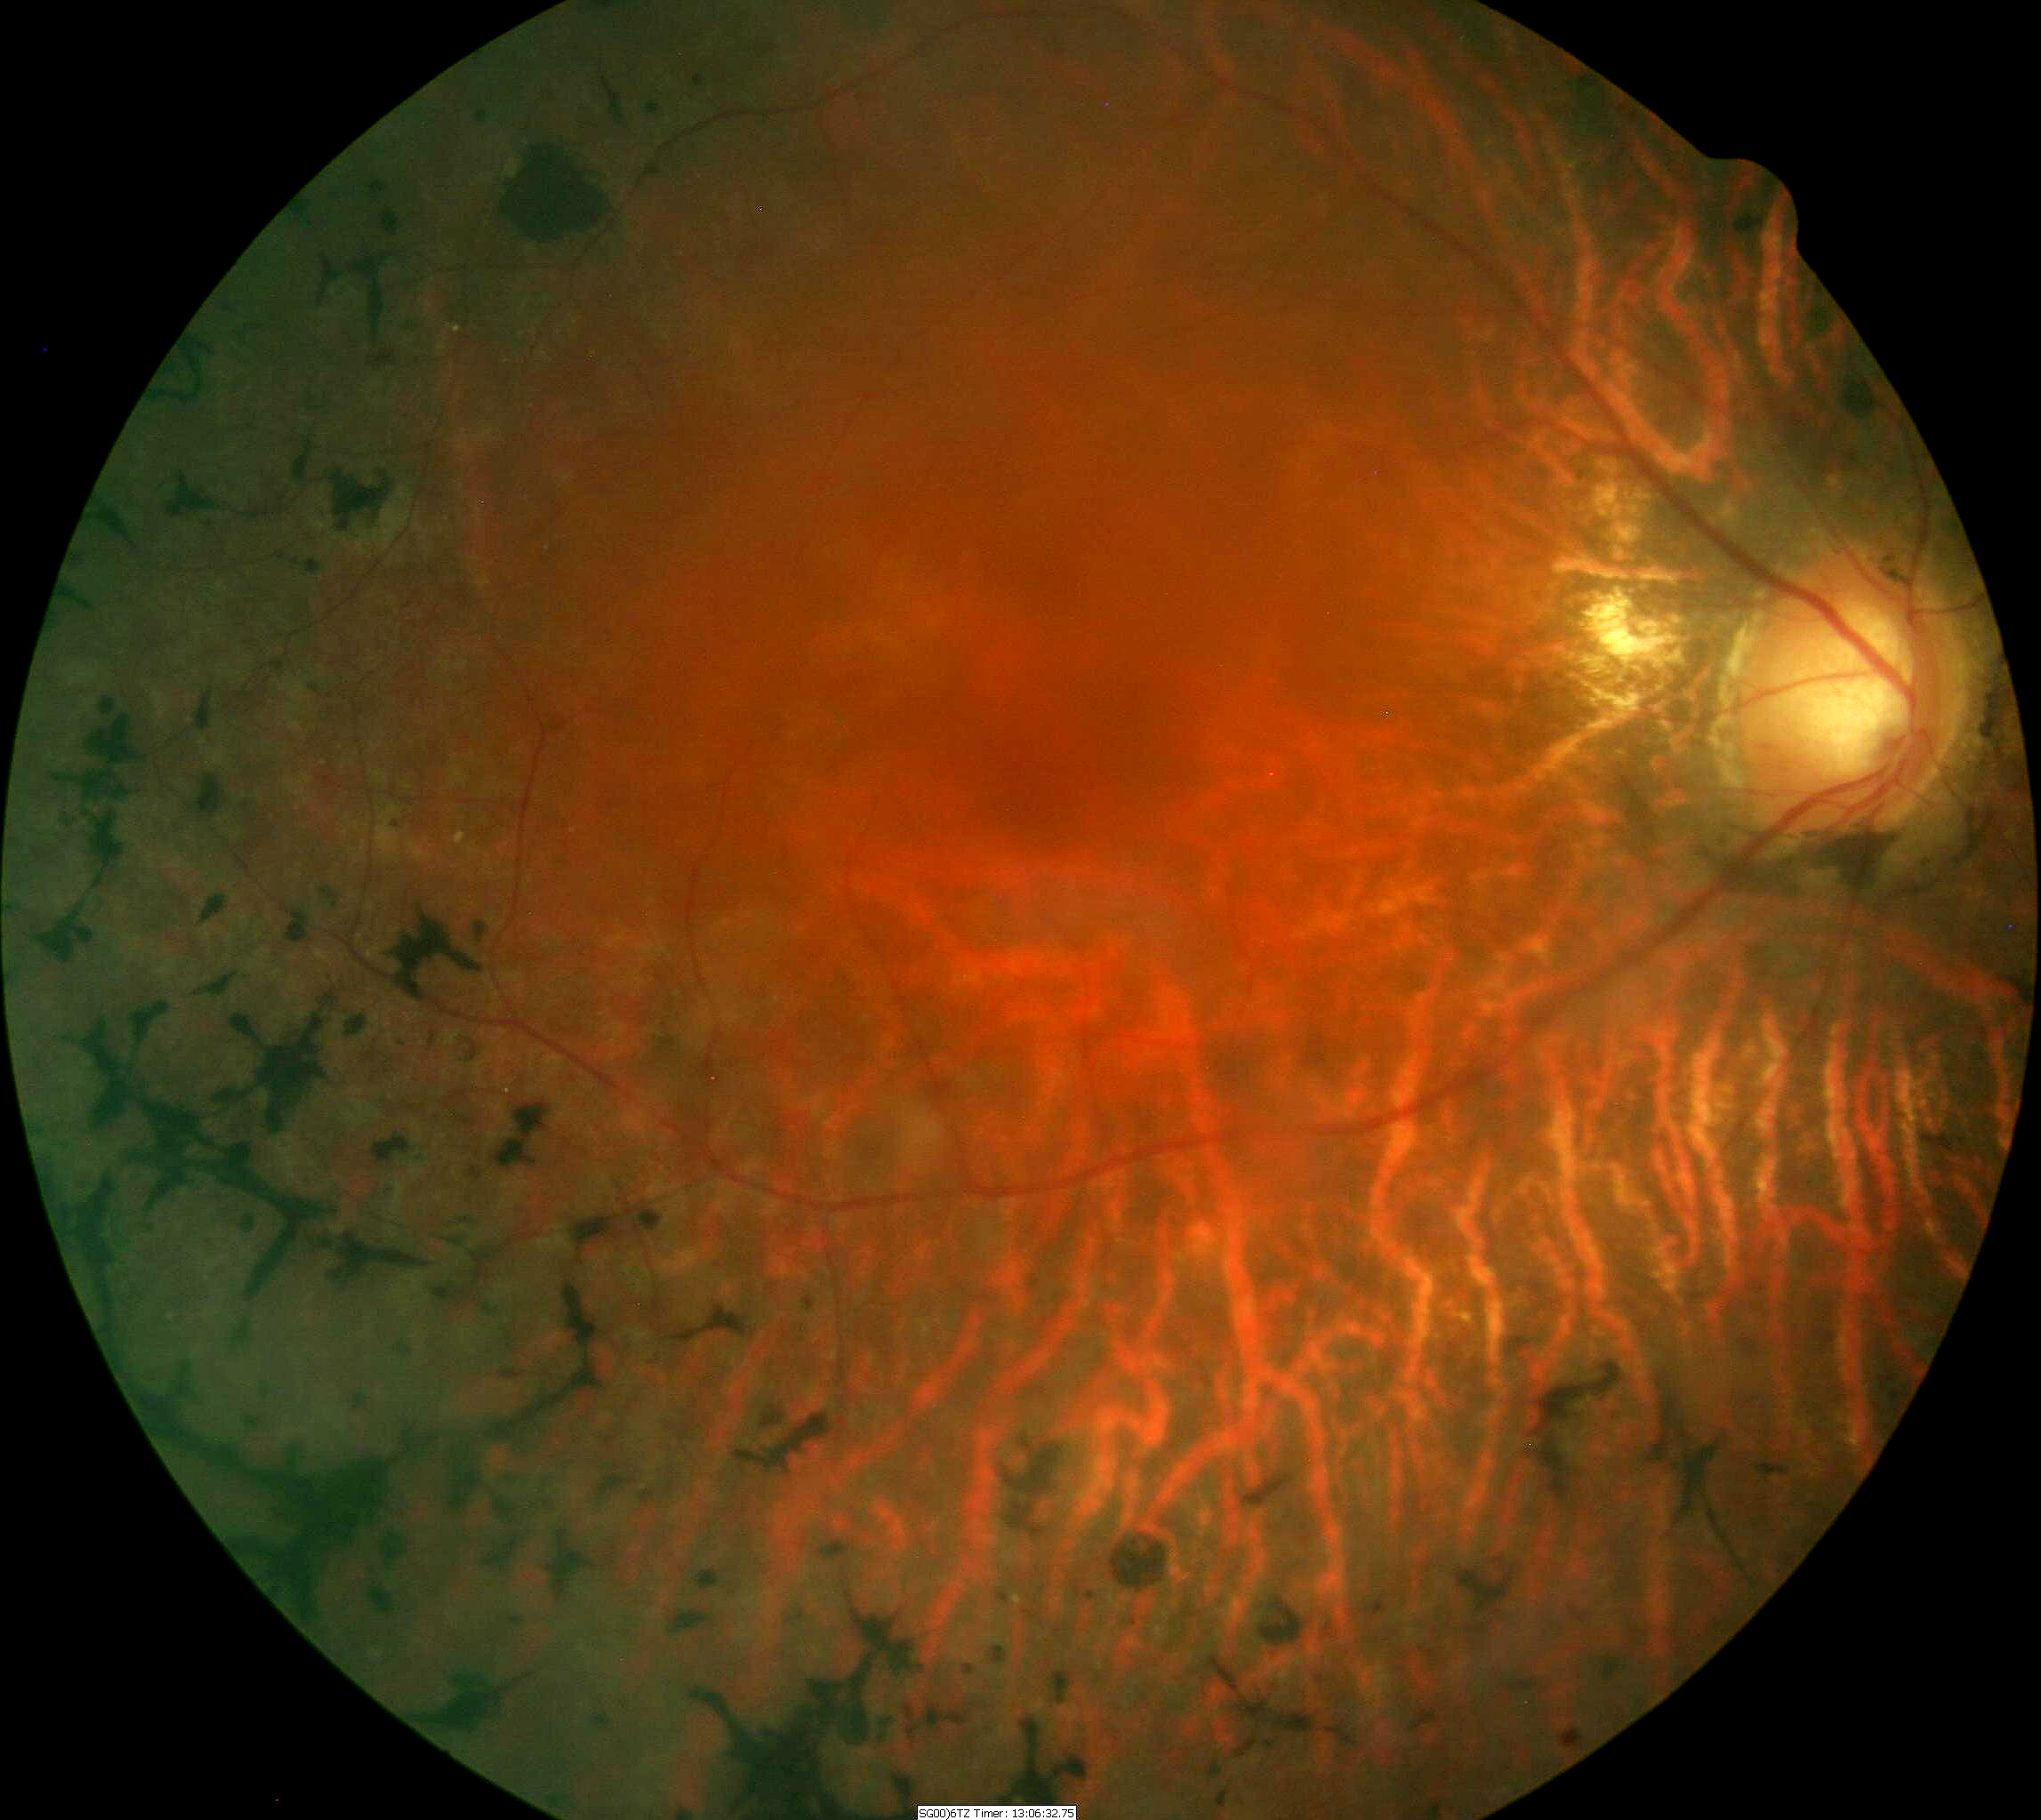 Crystal retinal